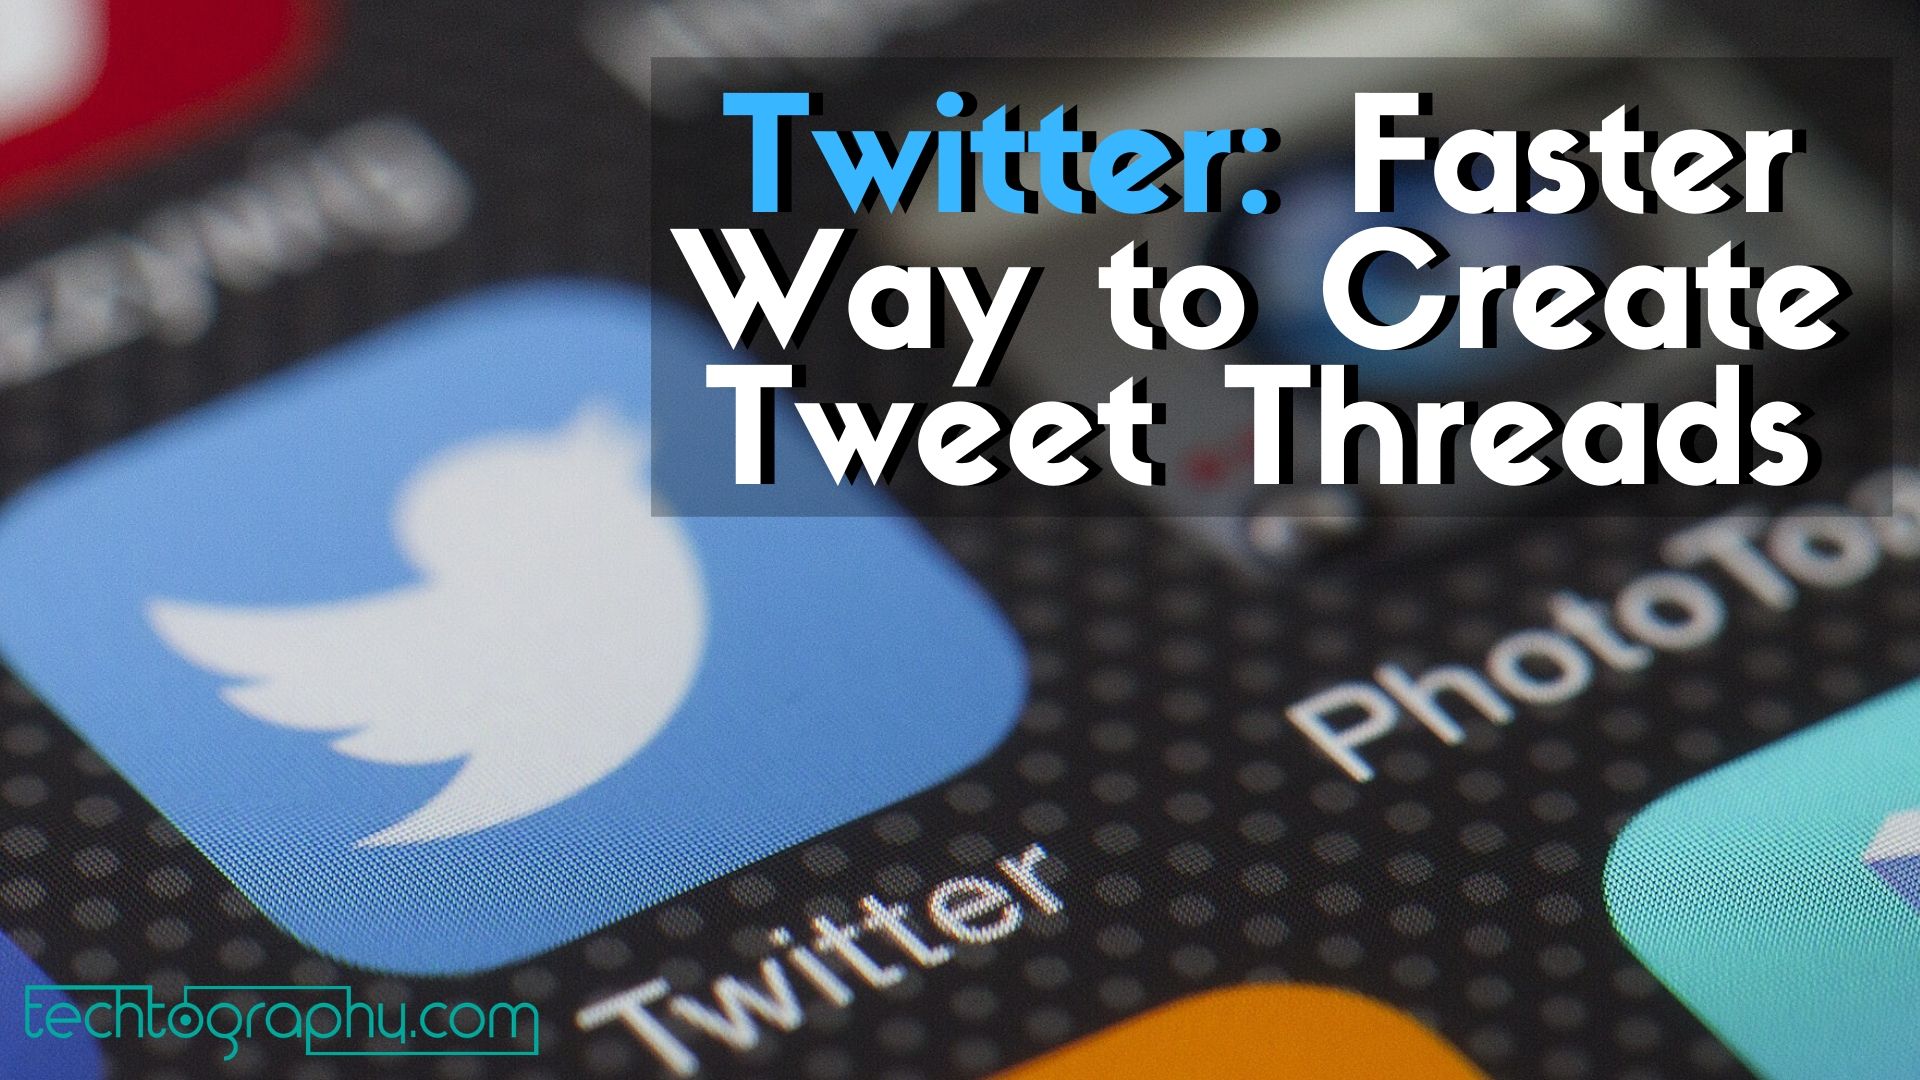 Twitter: Faster Way to Create Tweet Threads